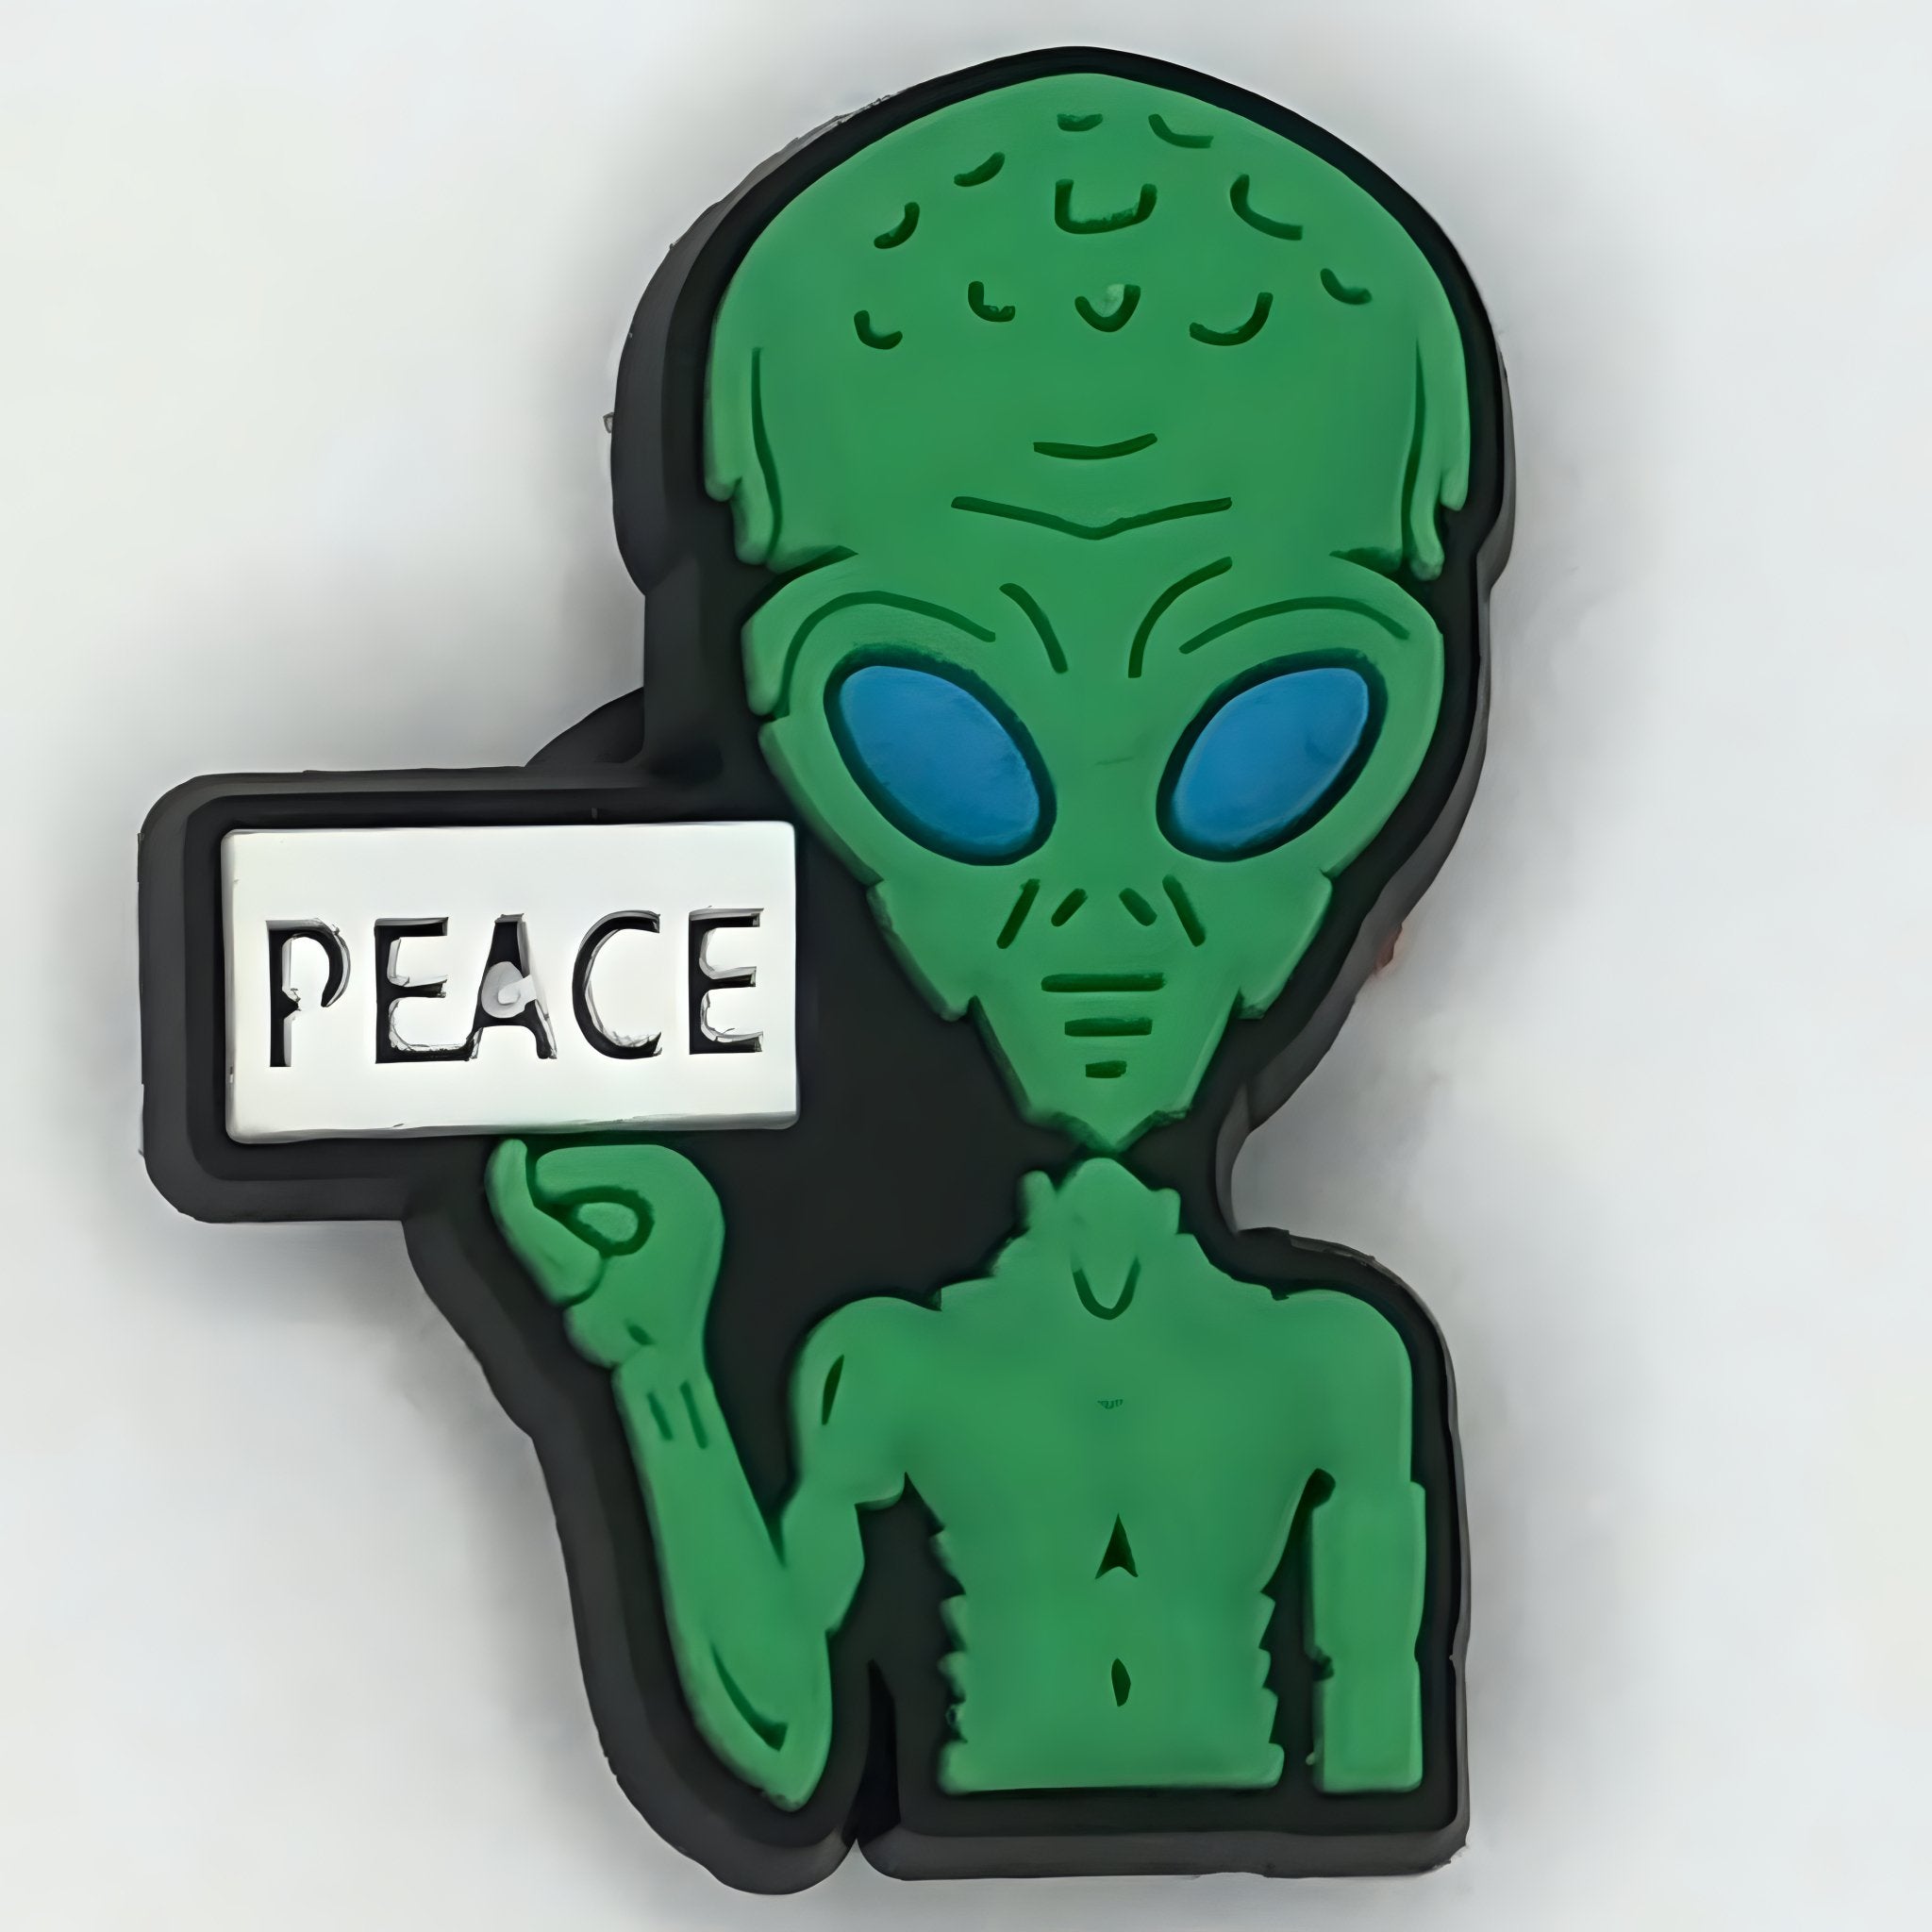 "Peace & Alien Charm ☮️👽: Cosmic Harmony!" - Questsole